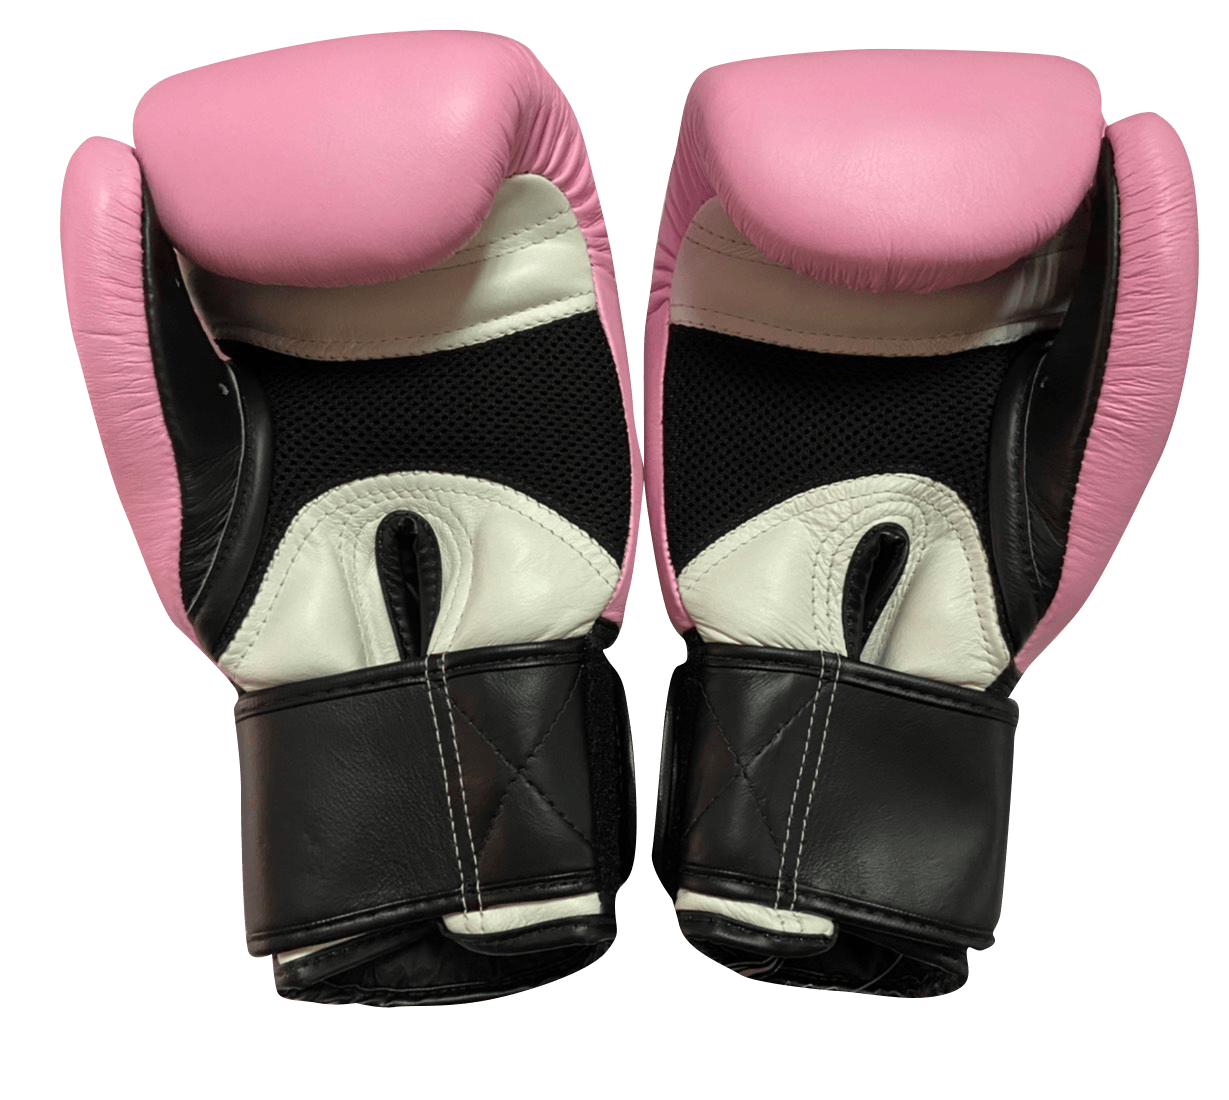 Top King Boxing Gloves Air velrco TKBGAV Pink White Black - SUPER EXPORT SHOP